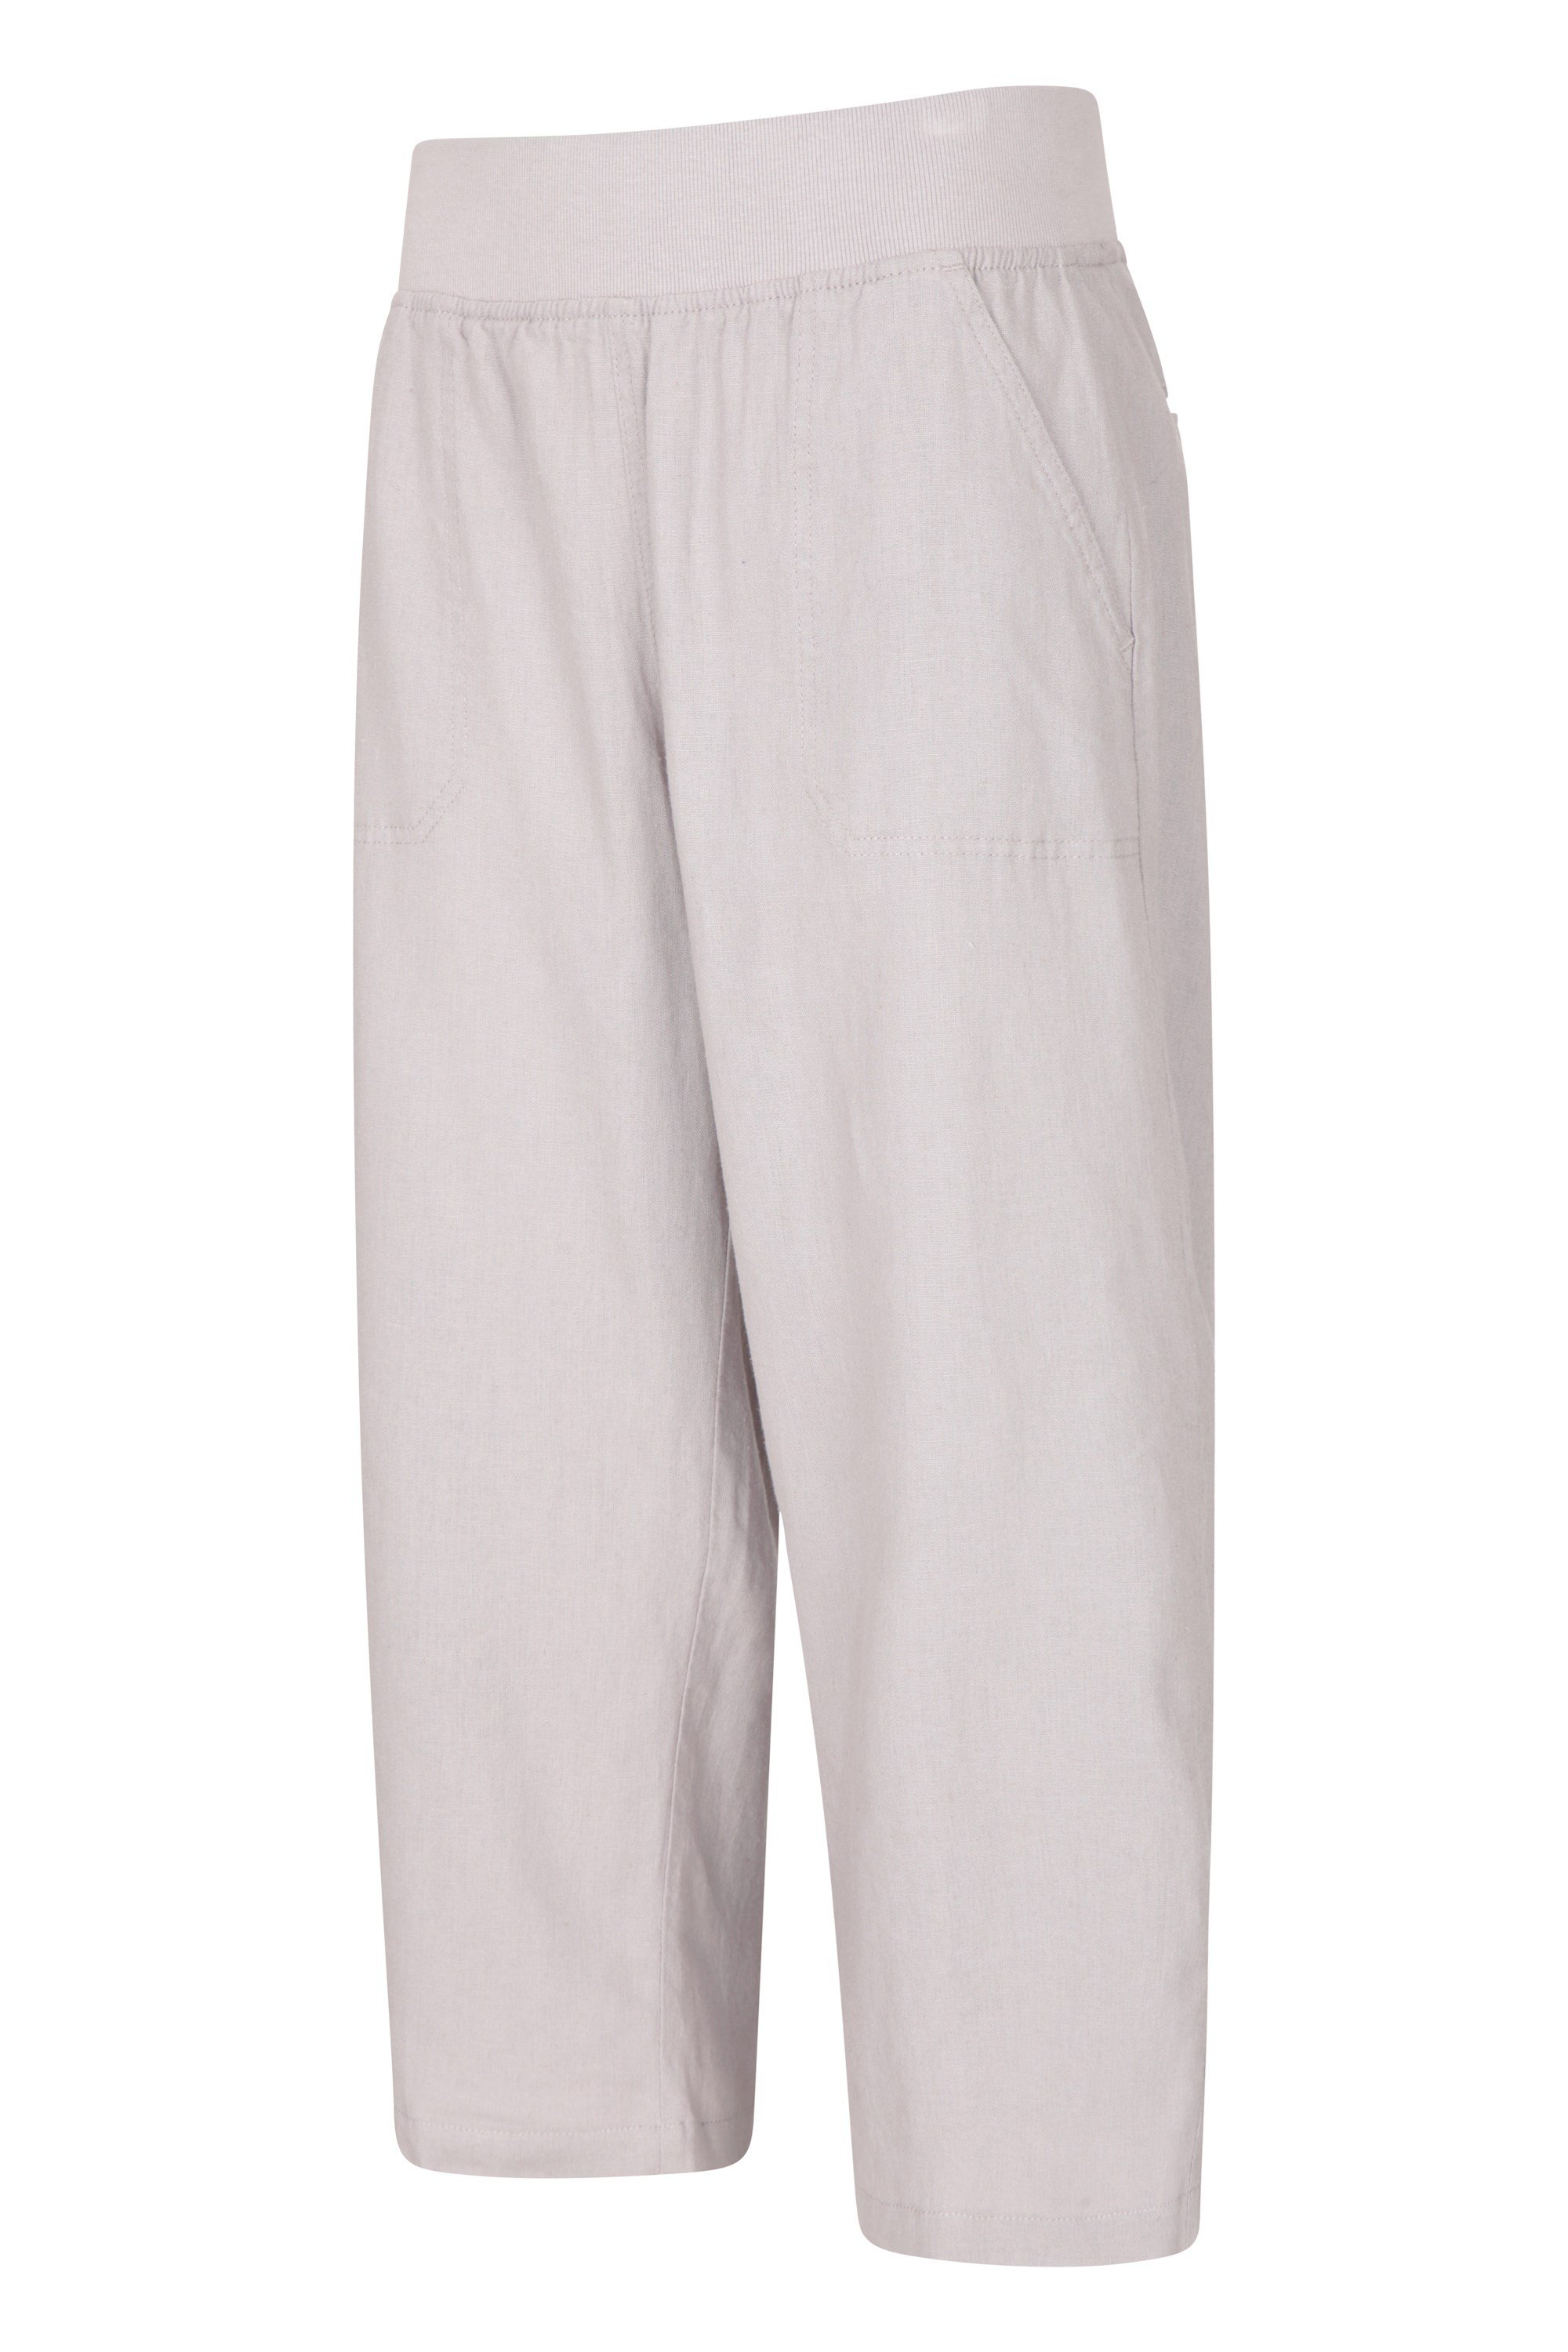 Cotton Capris For Women - Half Capri Pants - Grey